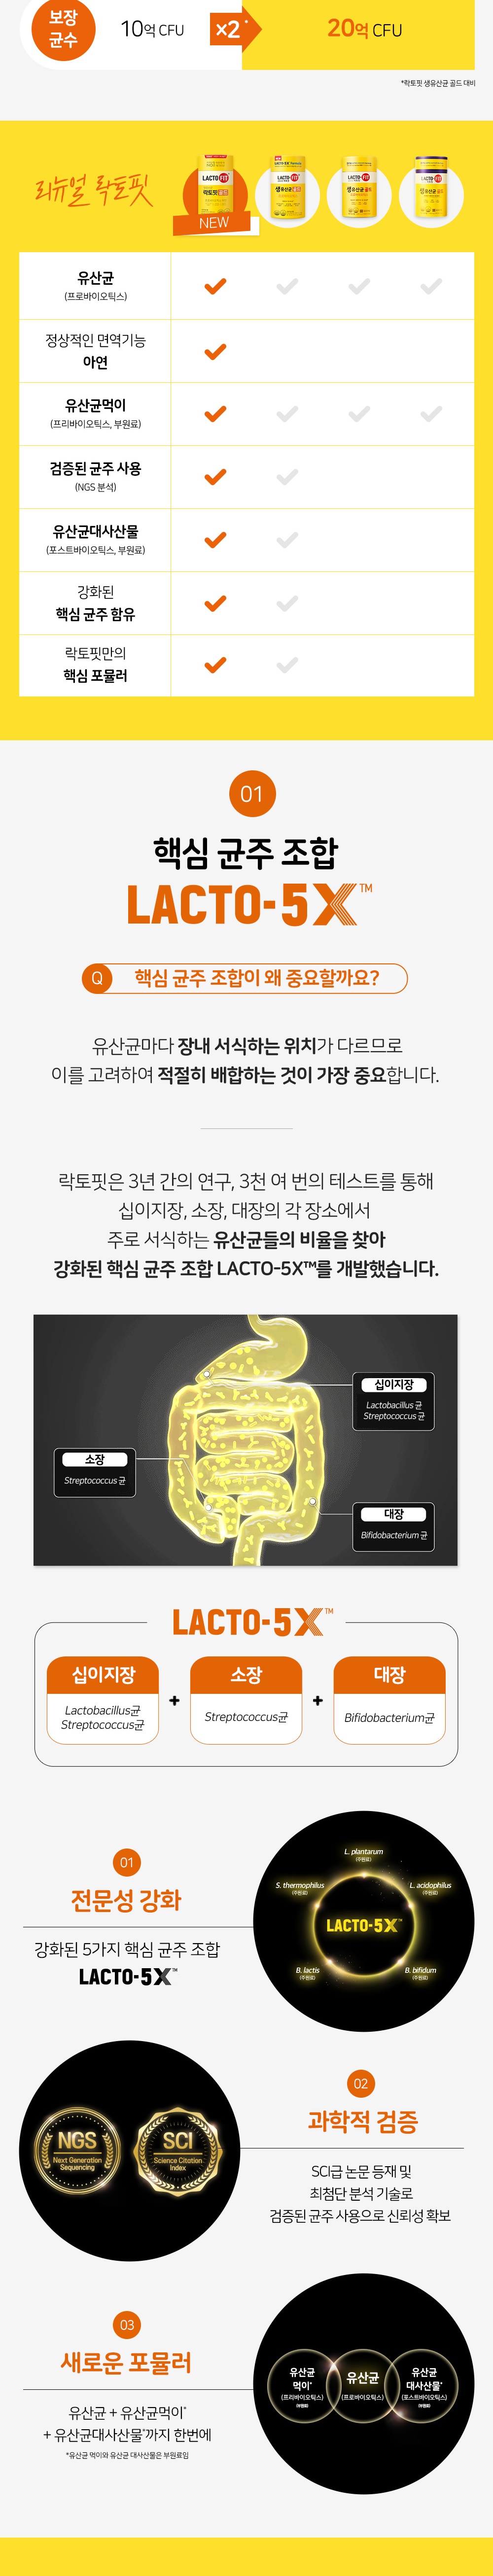 lactofit-gold-5x-02-1-.jpg